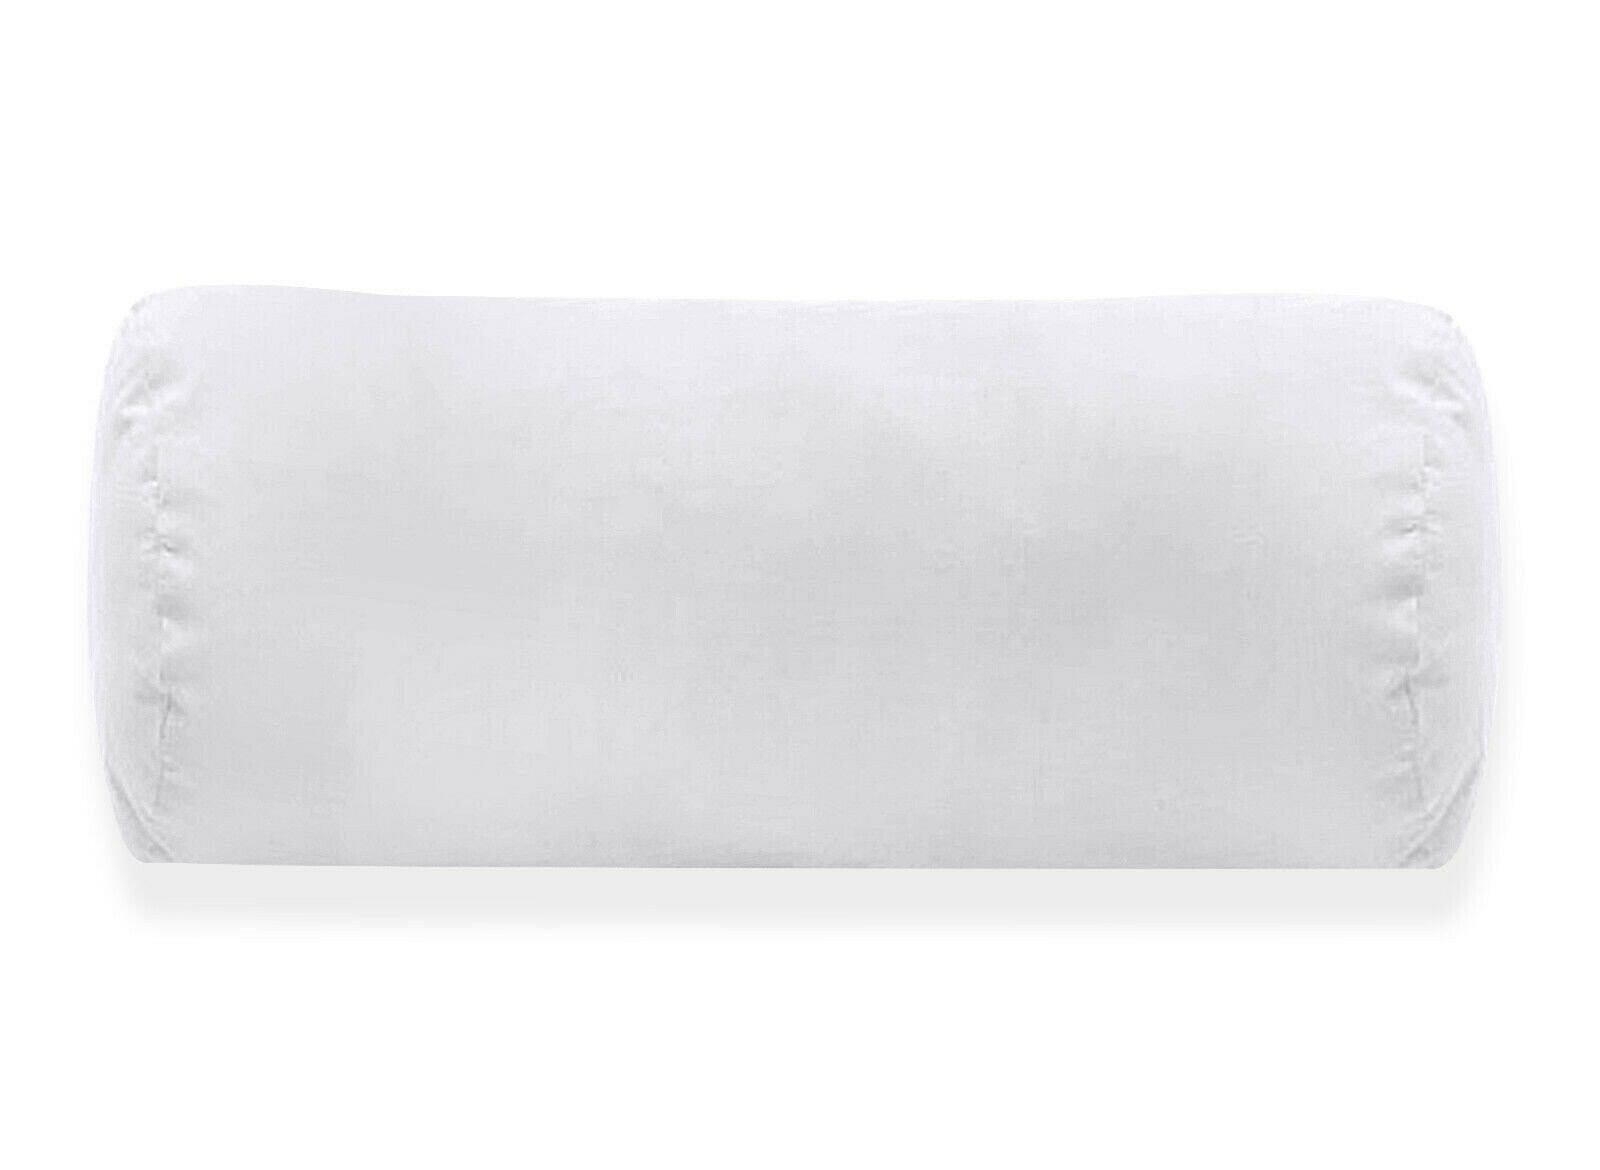 Hollowfiber Round Bolster Pillow Pregnancy Body Support Neck Knee Premium  White Cushion in 3 Sizes 